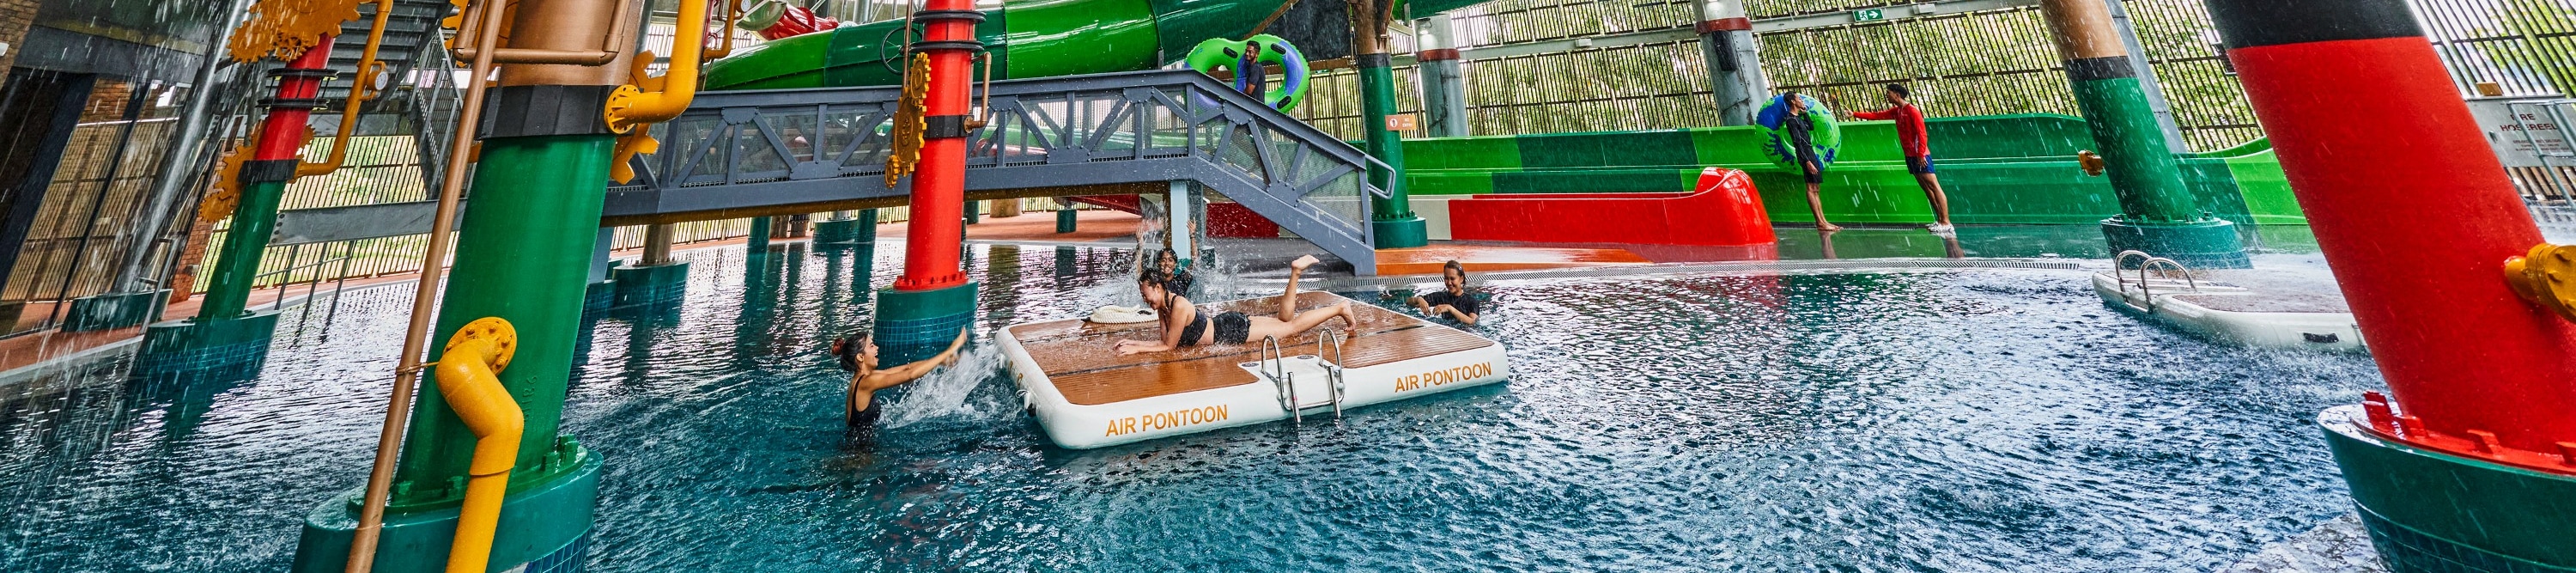 新加坡Aqua Adventure門票 - HomeTeamNS Bedok Reservoir